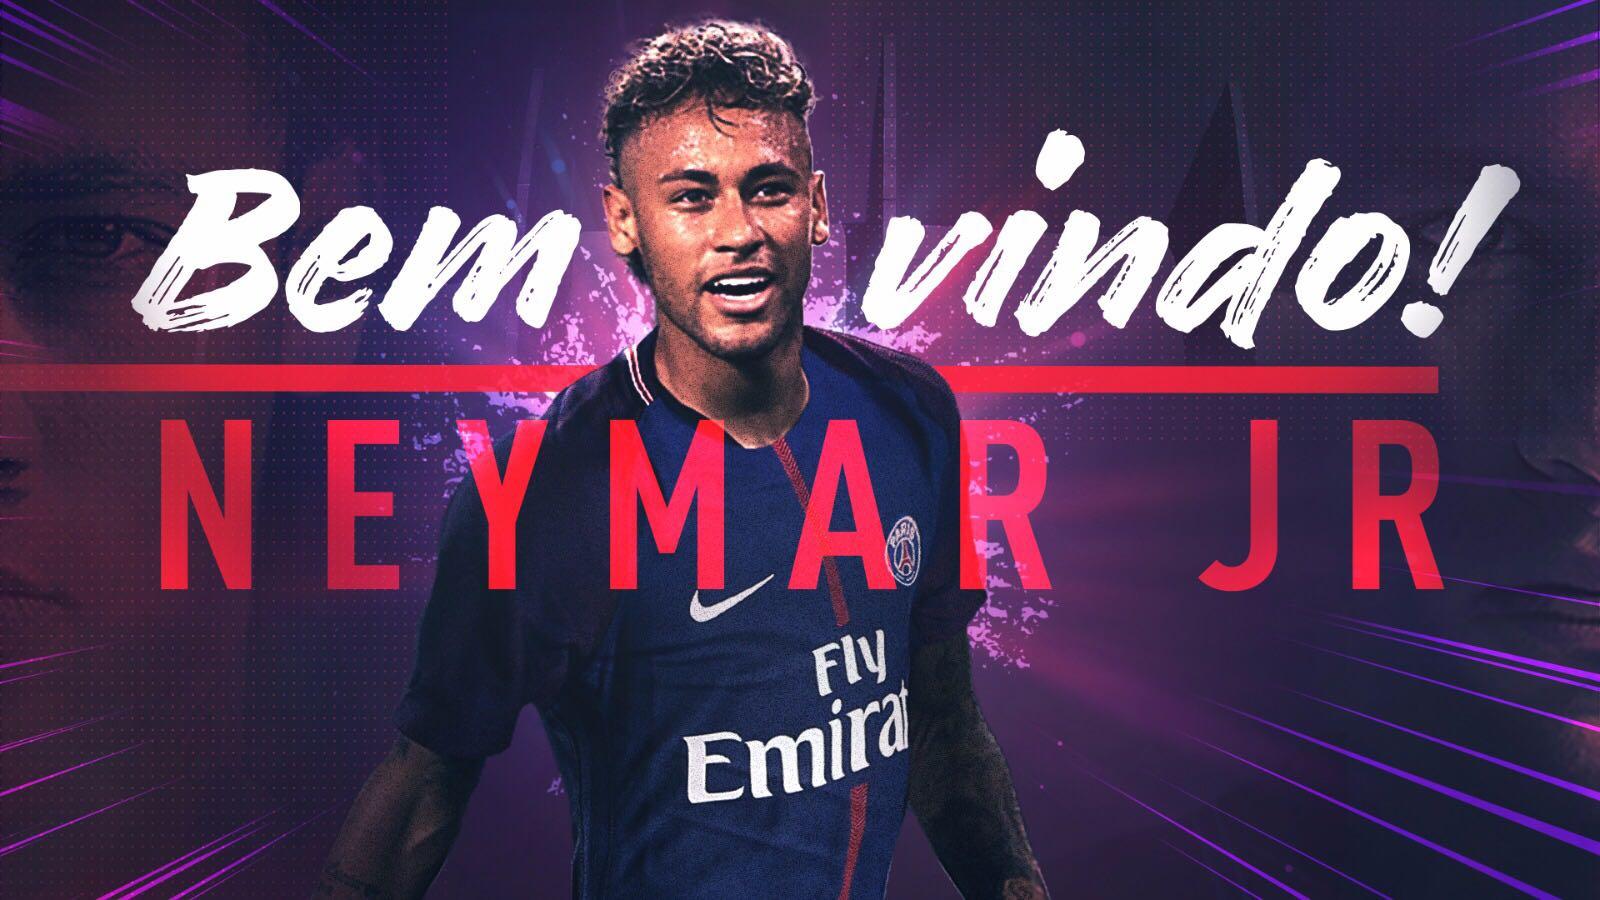 Neymar PSG Wallpaper 12 HD Wallpaper Free